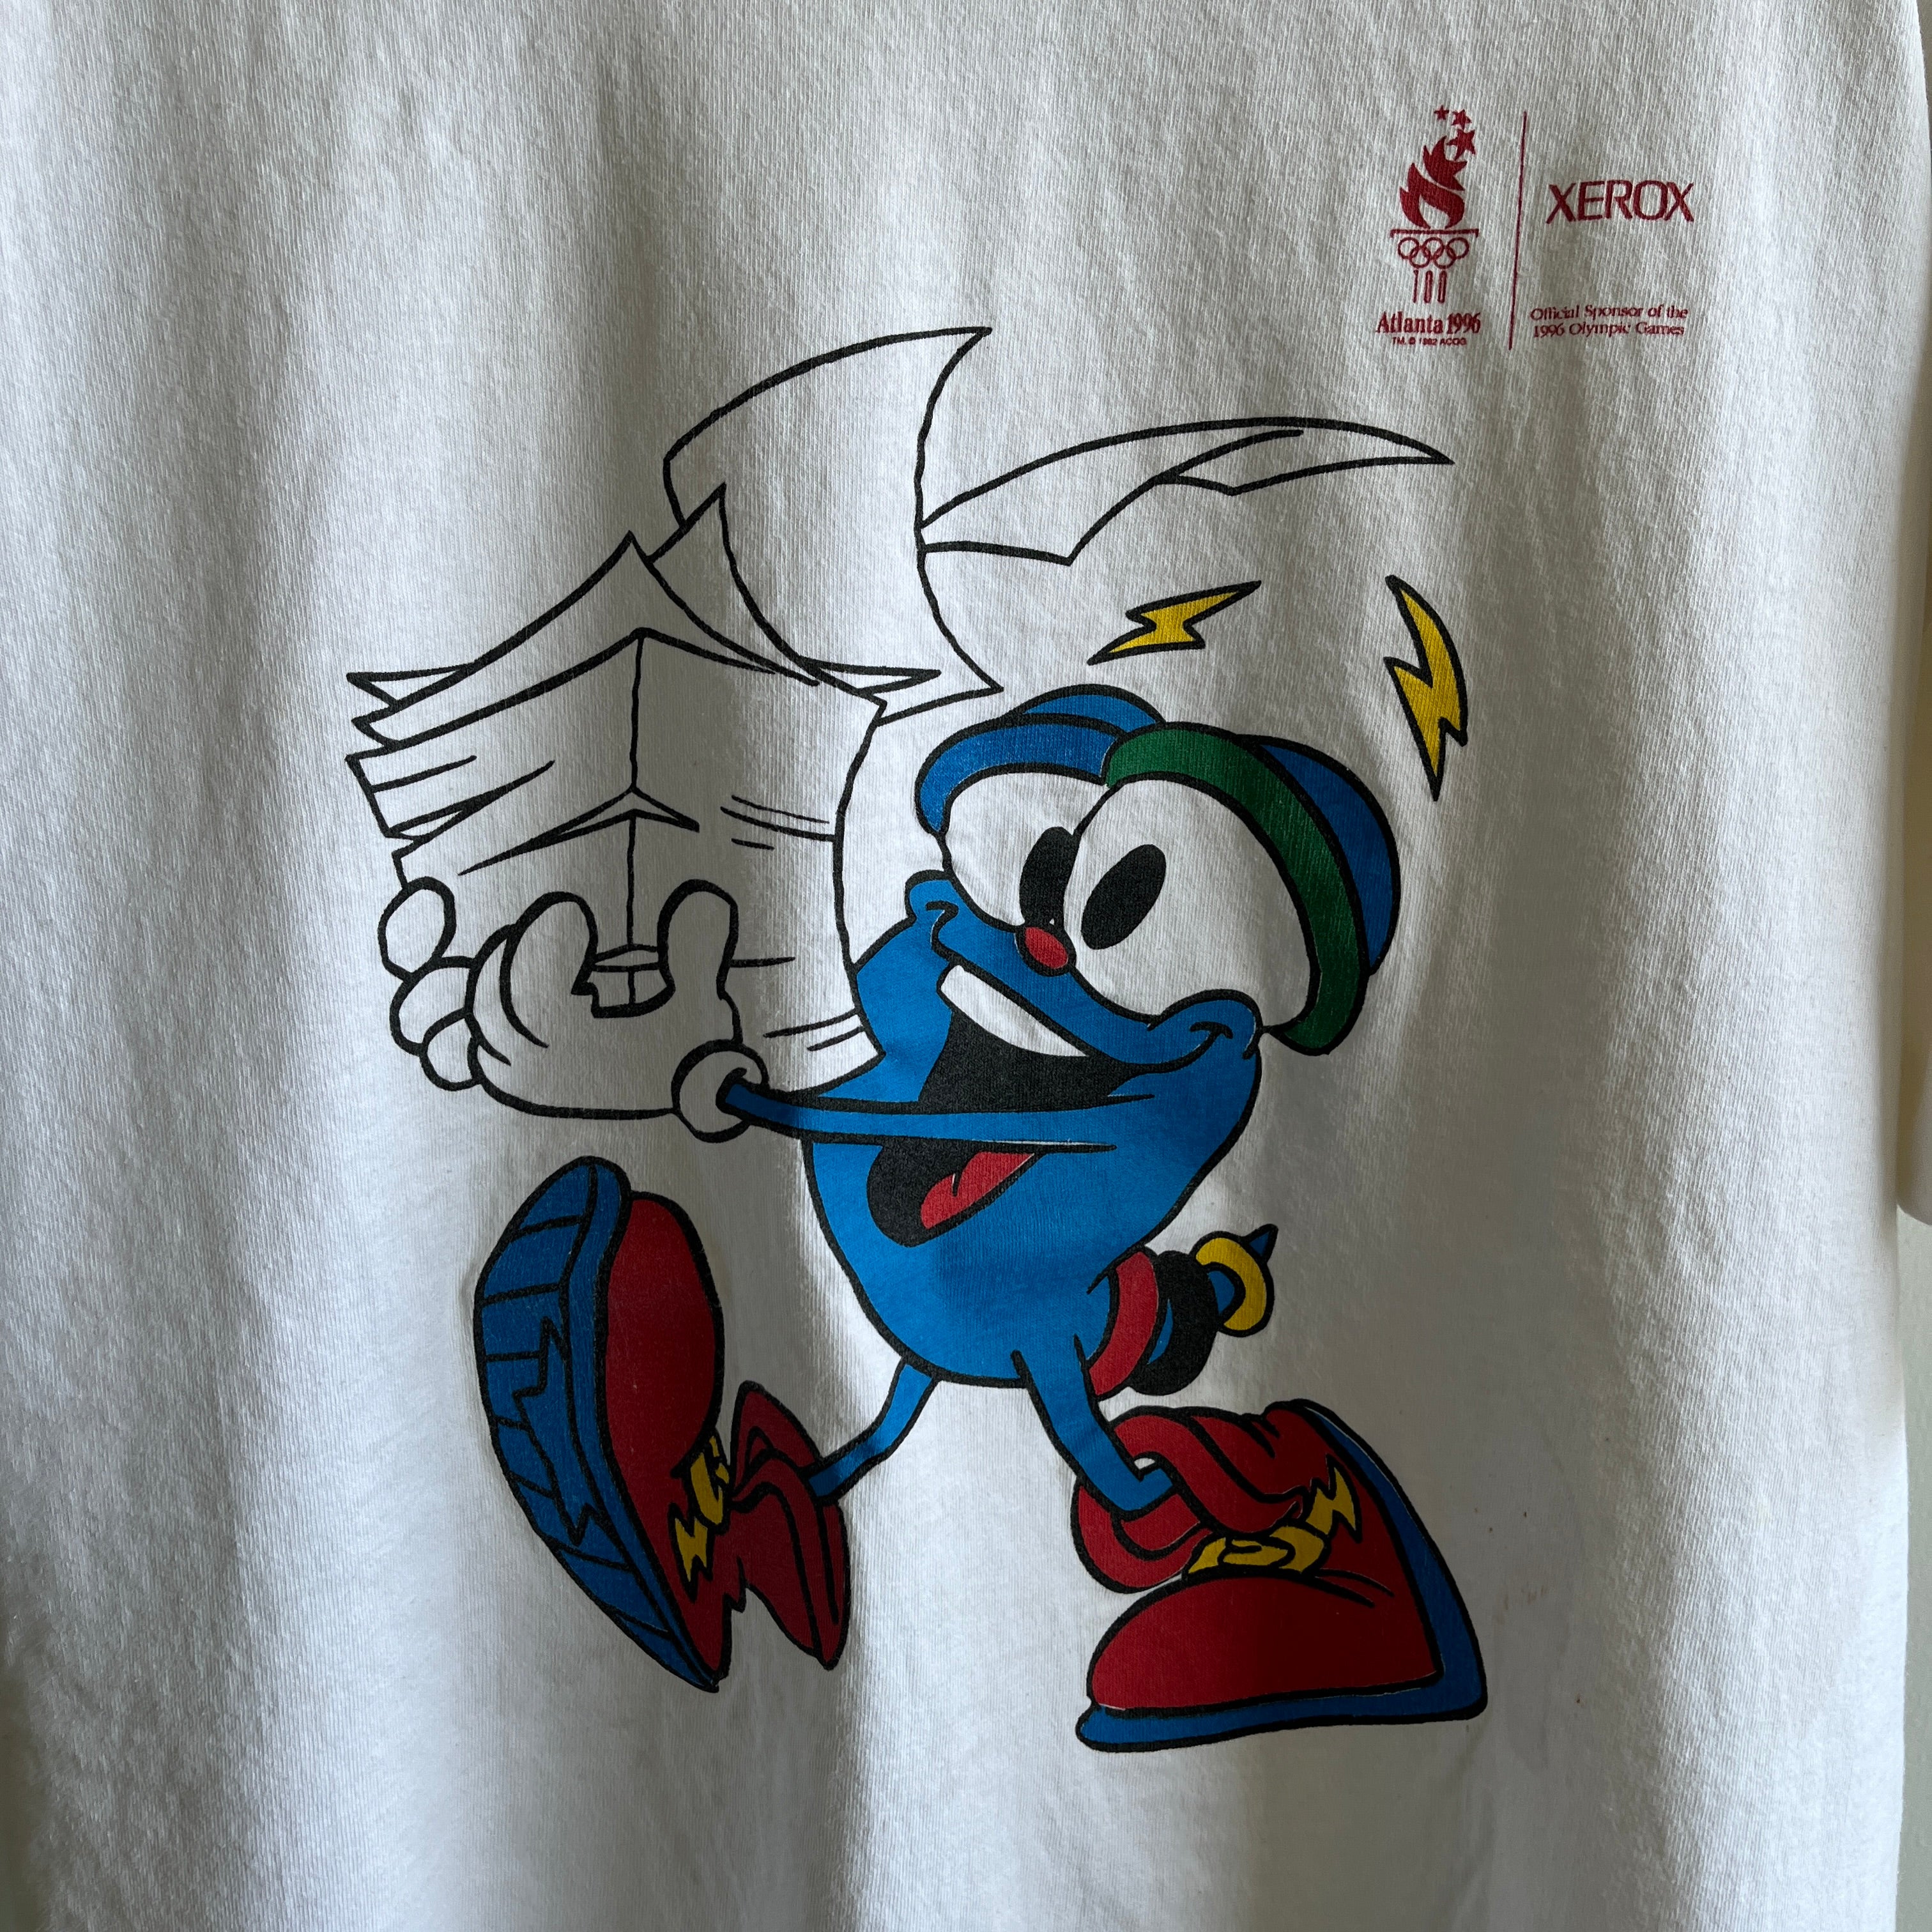 1996 Xerox Atlanta Olympics Advertisement T-Shirt